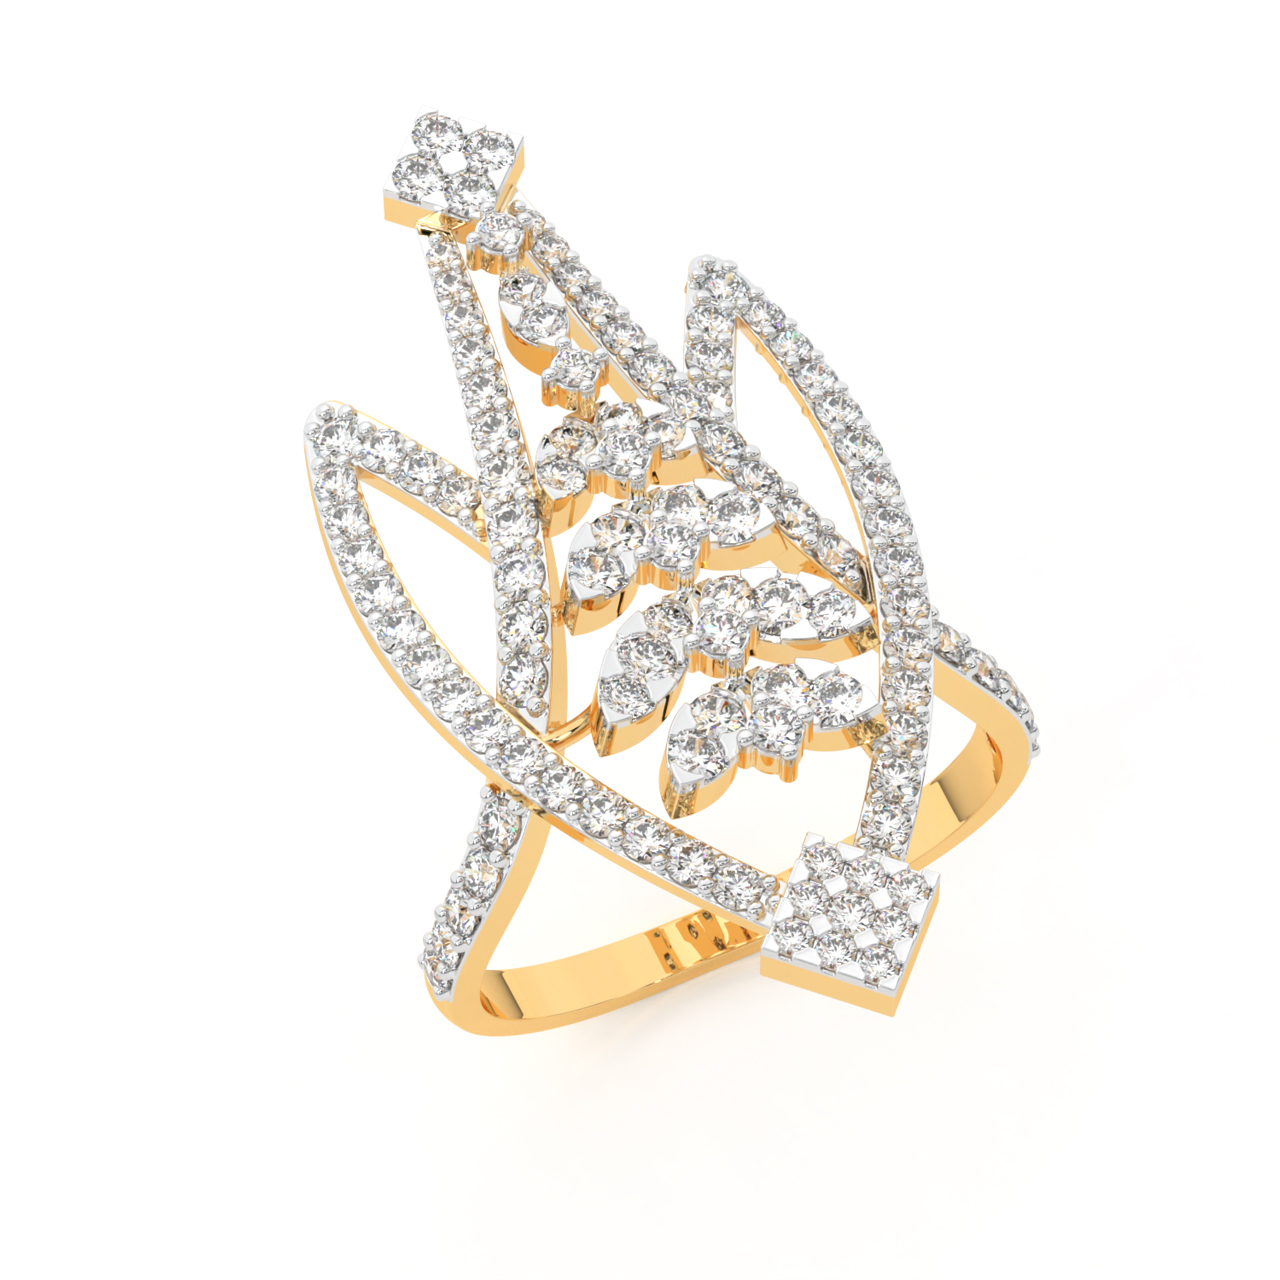 The Fishy Style Diamond Ring